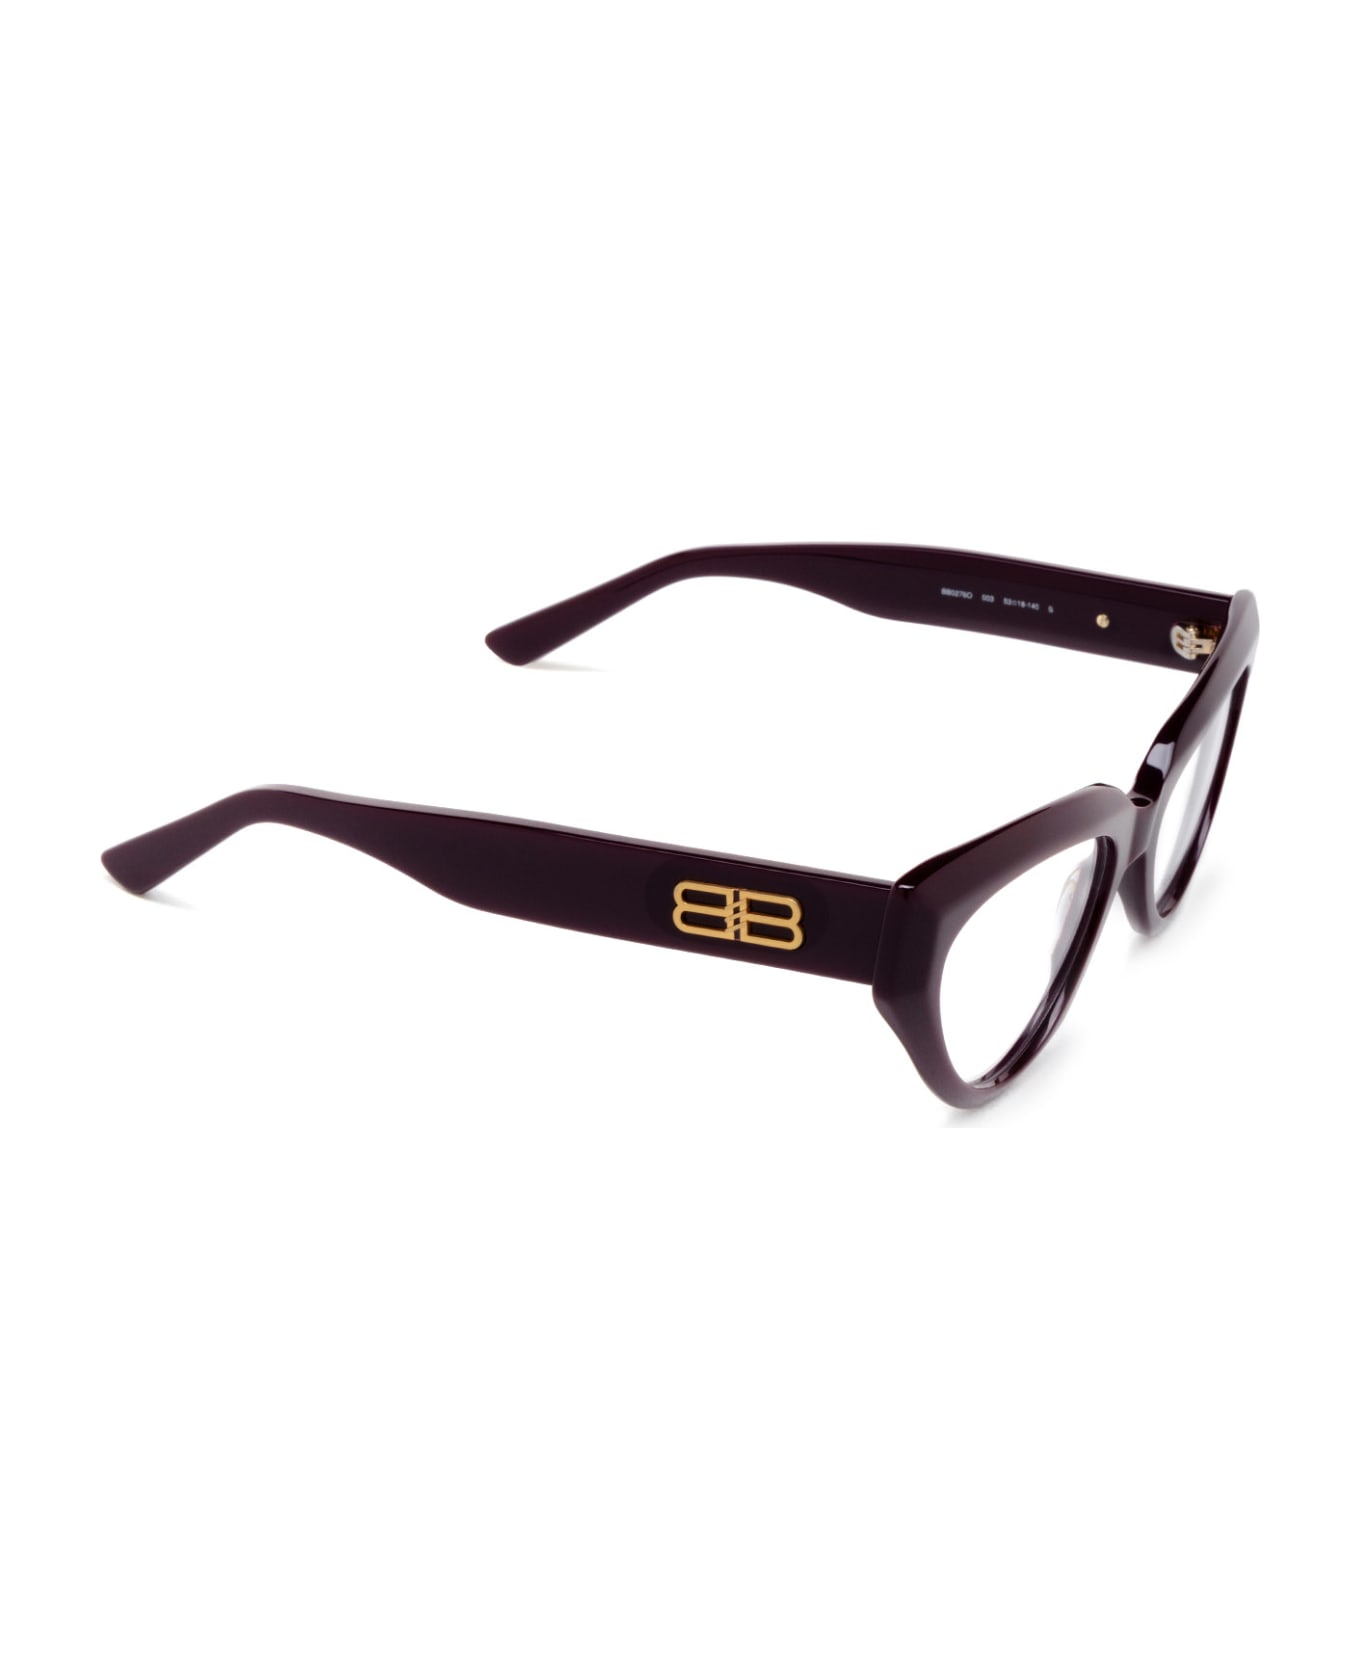 Balenciaga Eyewear Bb 0276 - Red Glasses - Red アイウェア